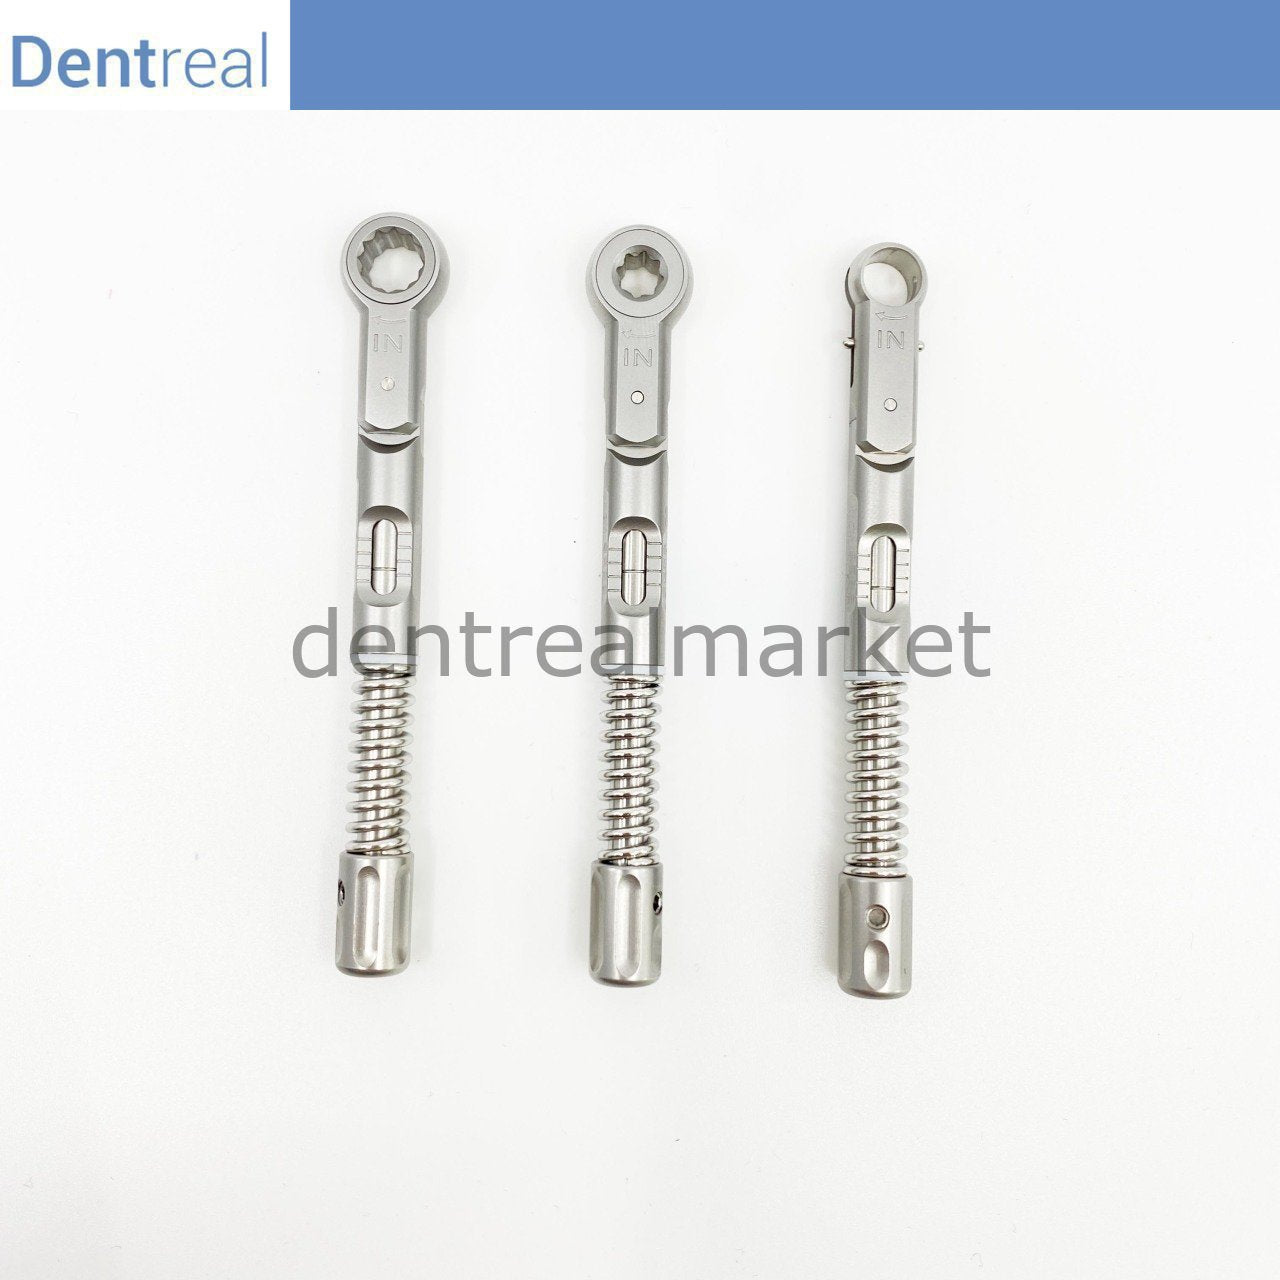 DentrealStore - Dentreal Implant Tourque Ratchet Wrench Kit (Implant Key)